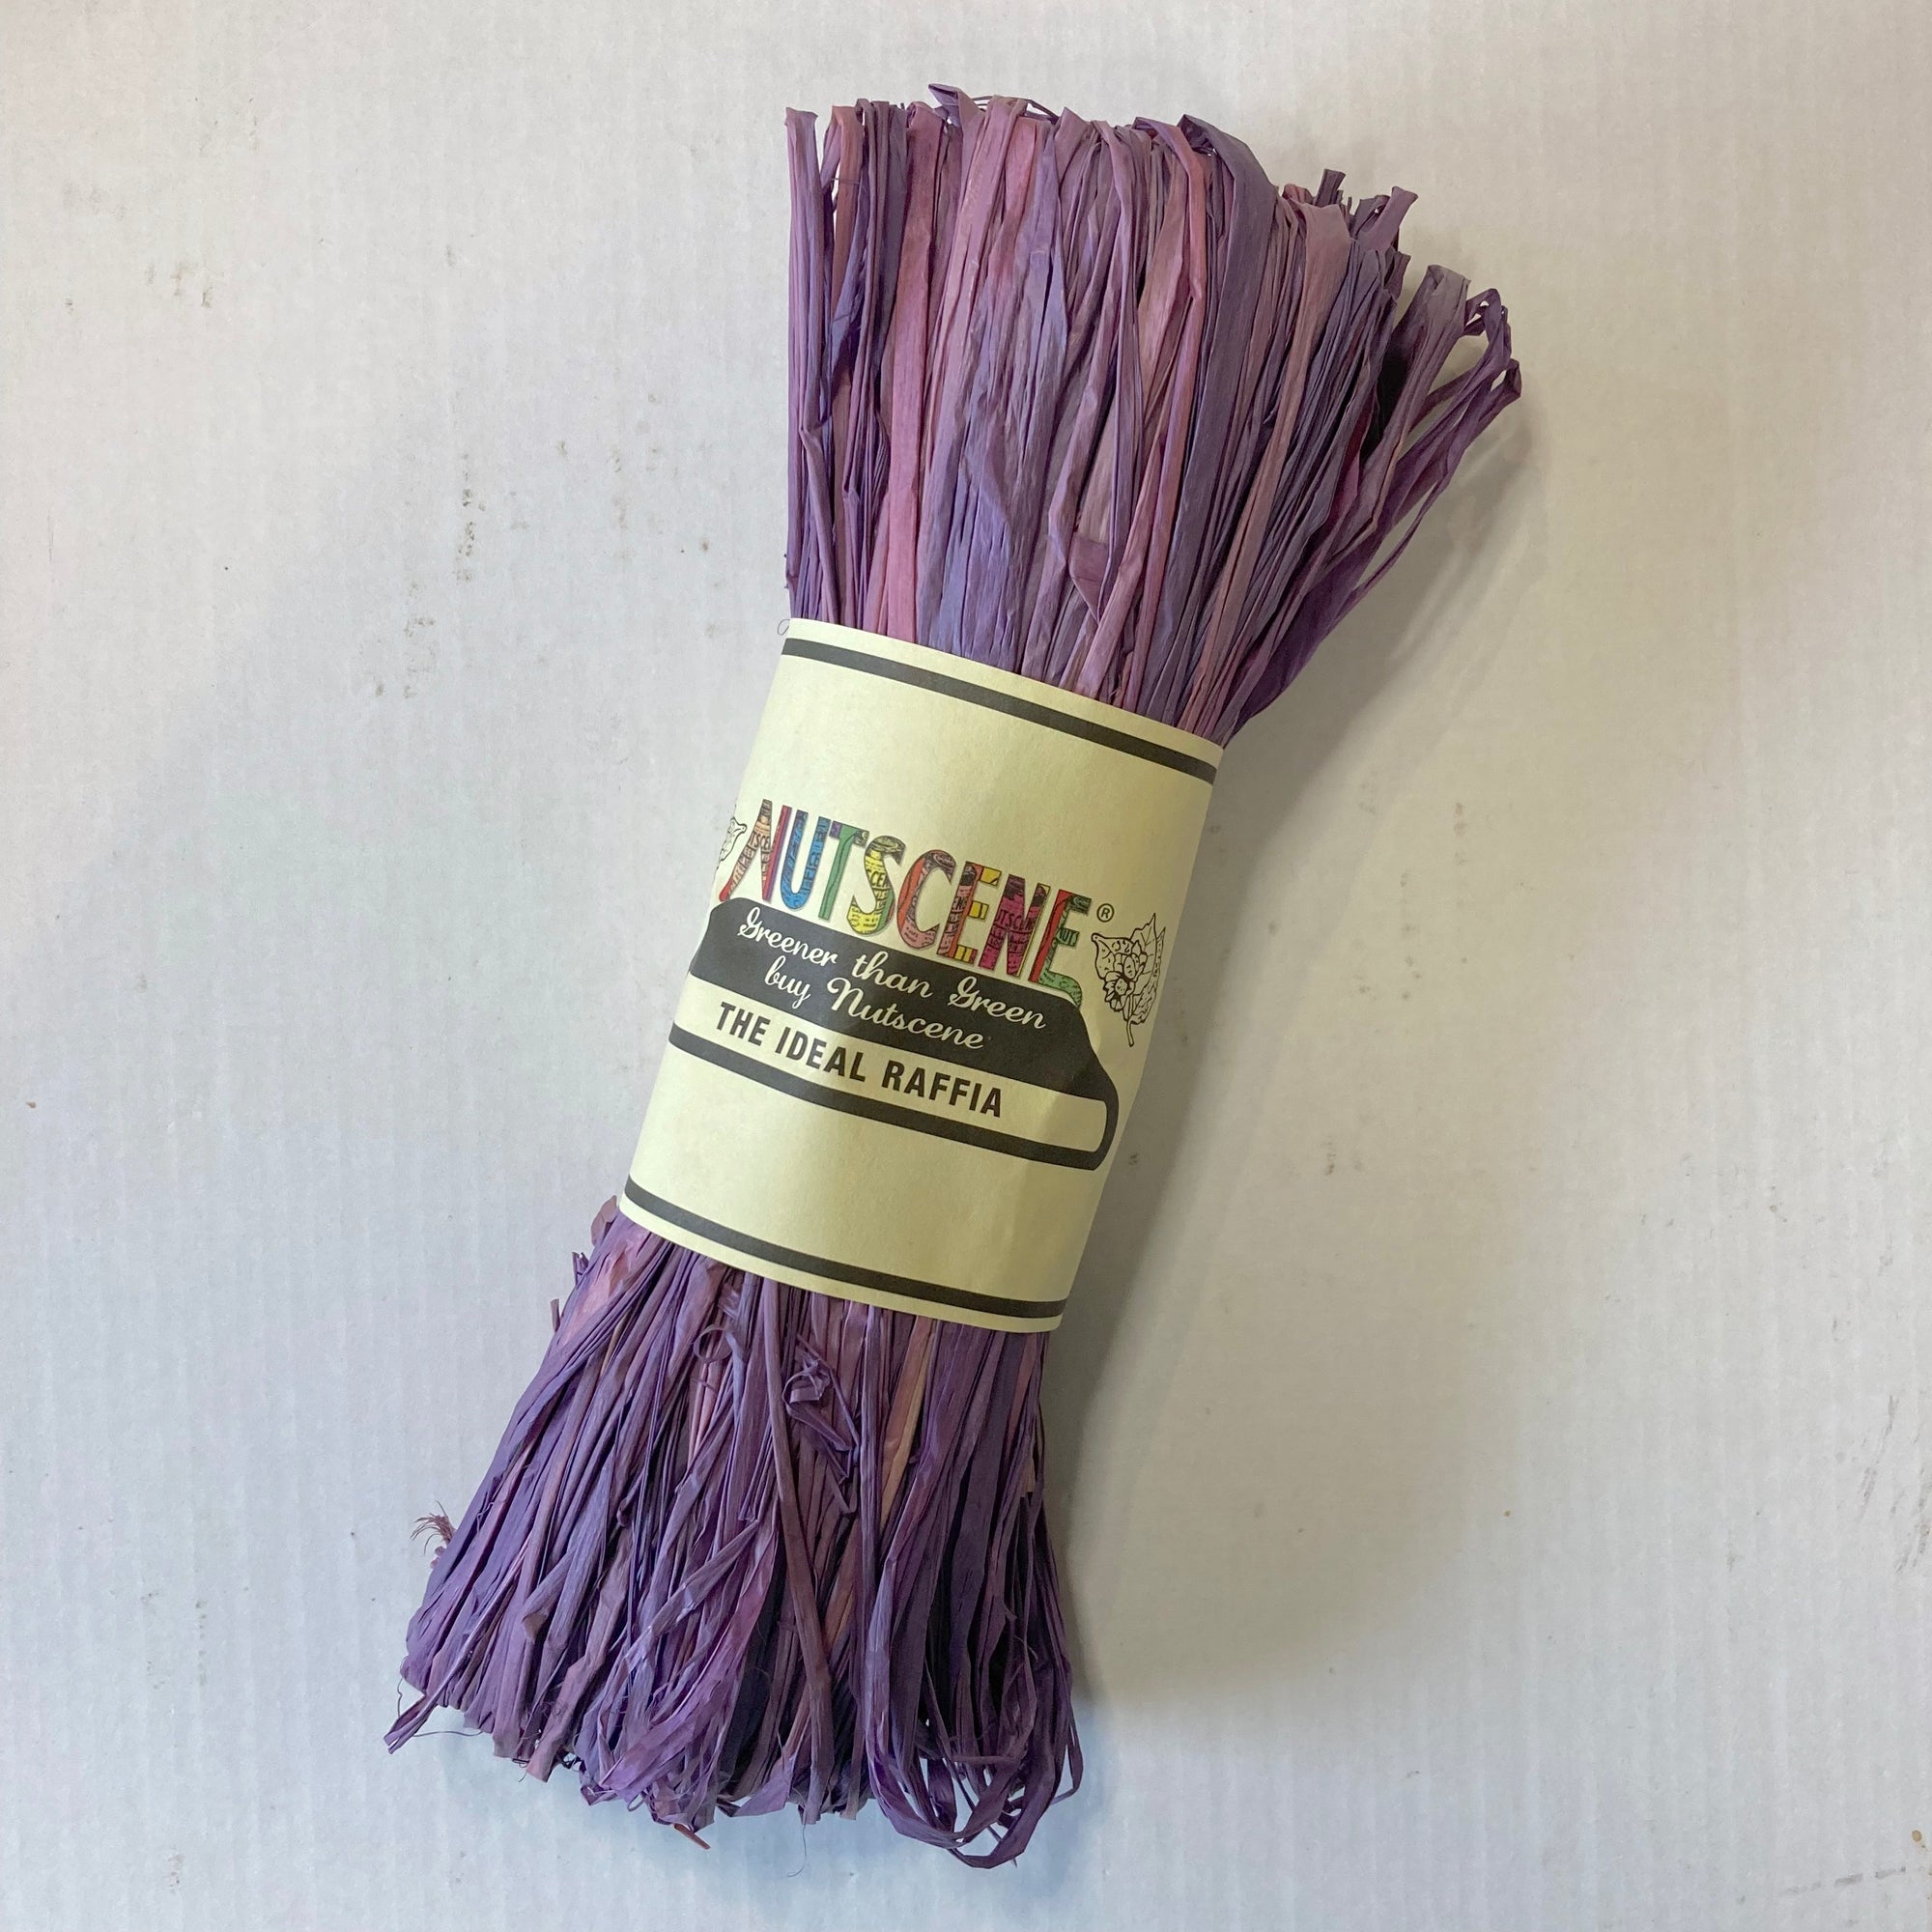 Nutscene Raffia 50g - Lavender Mist